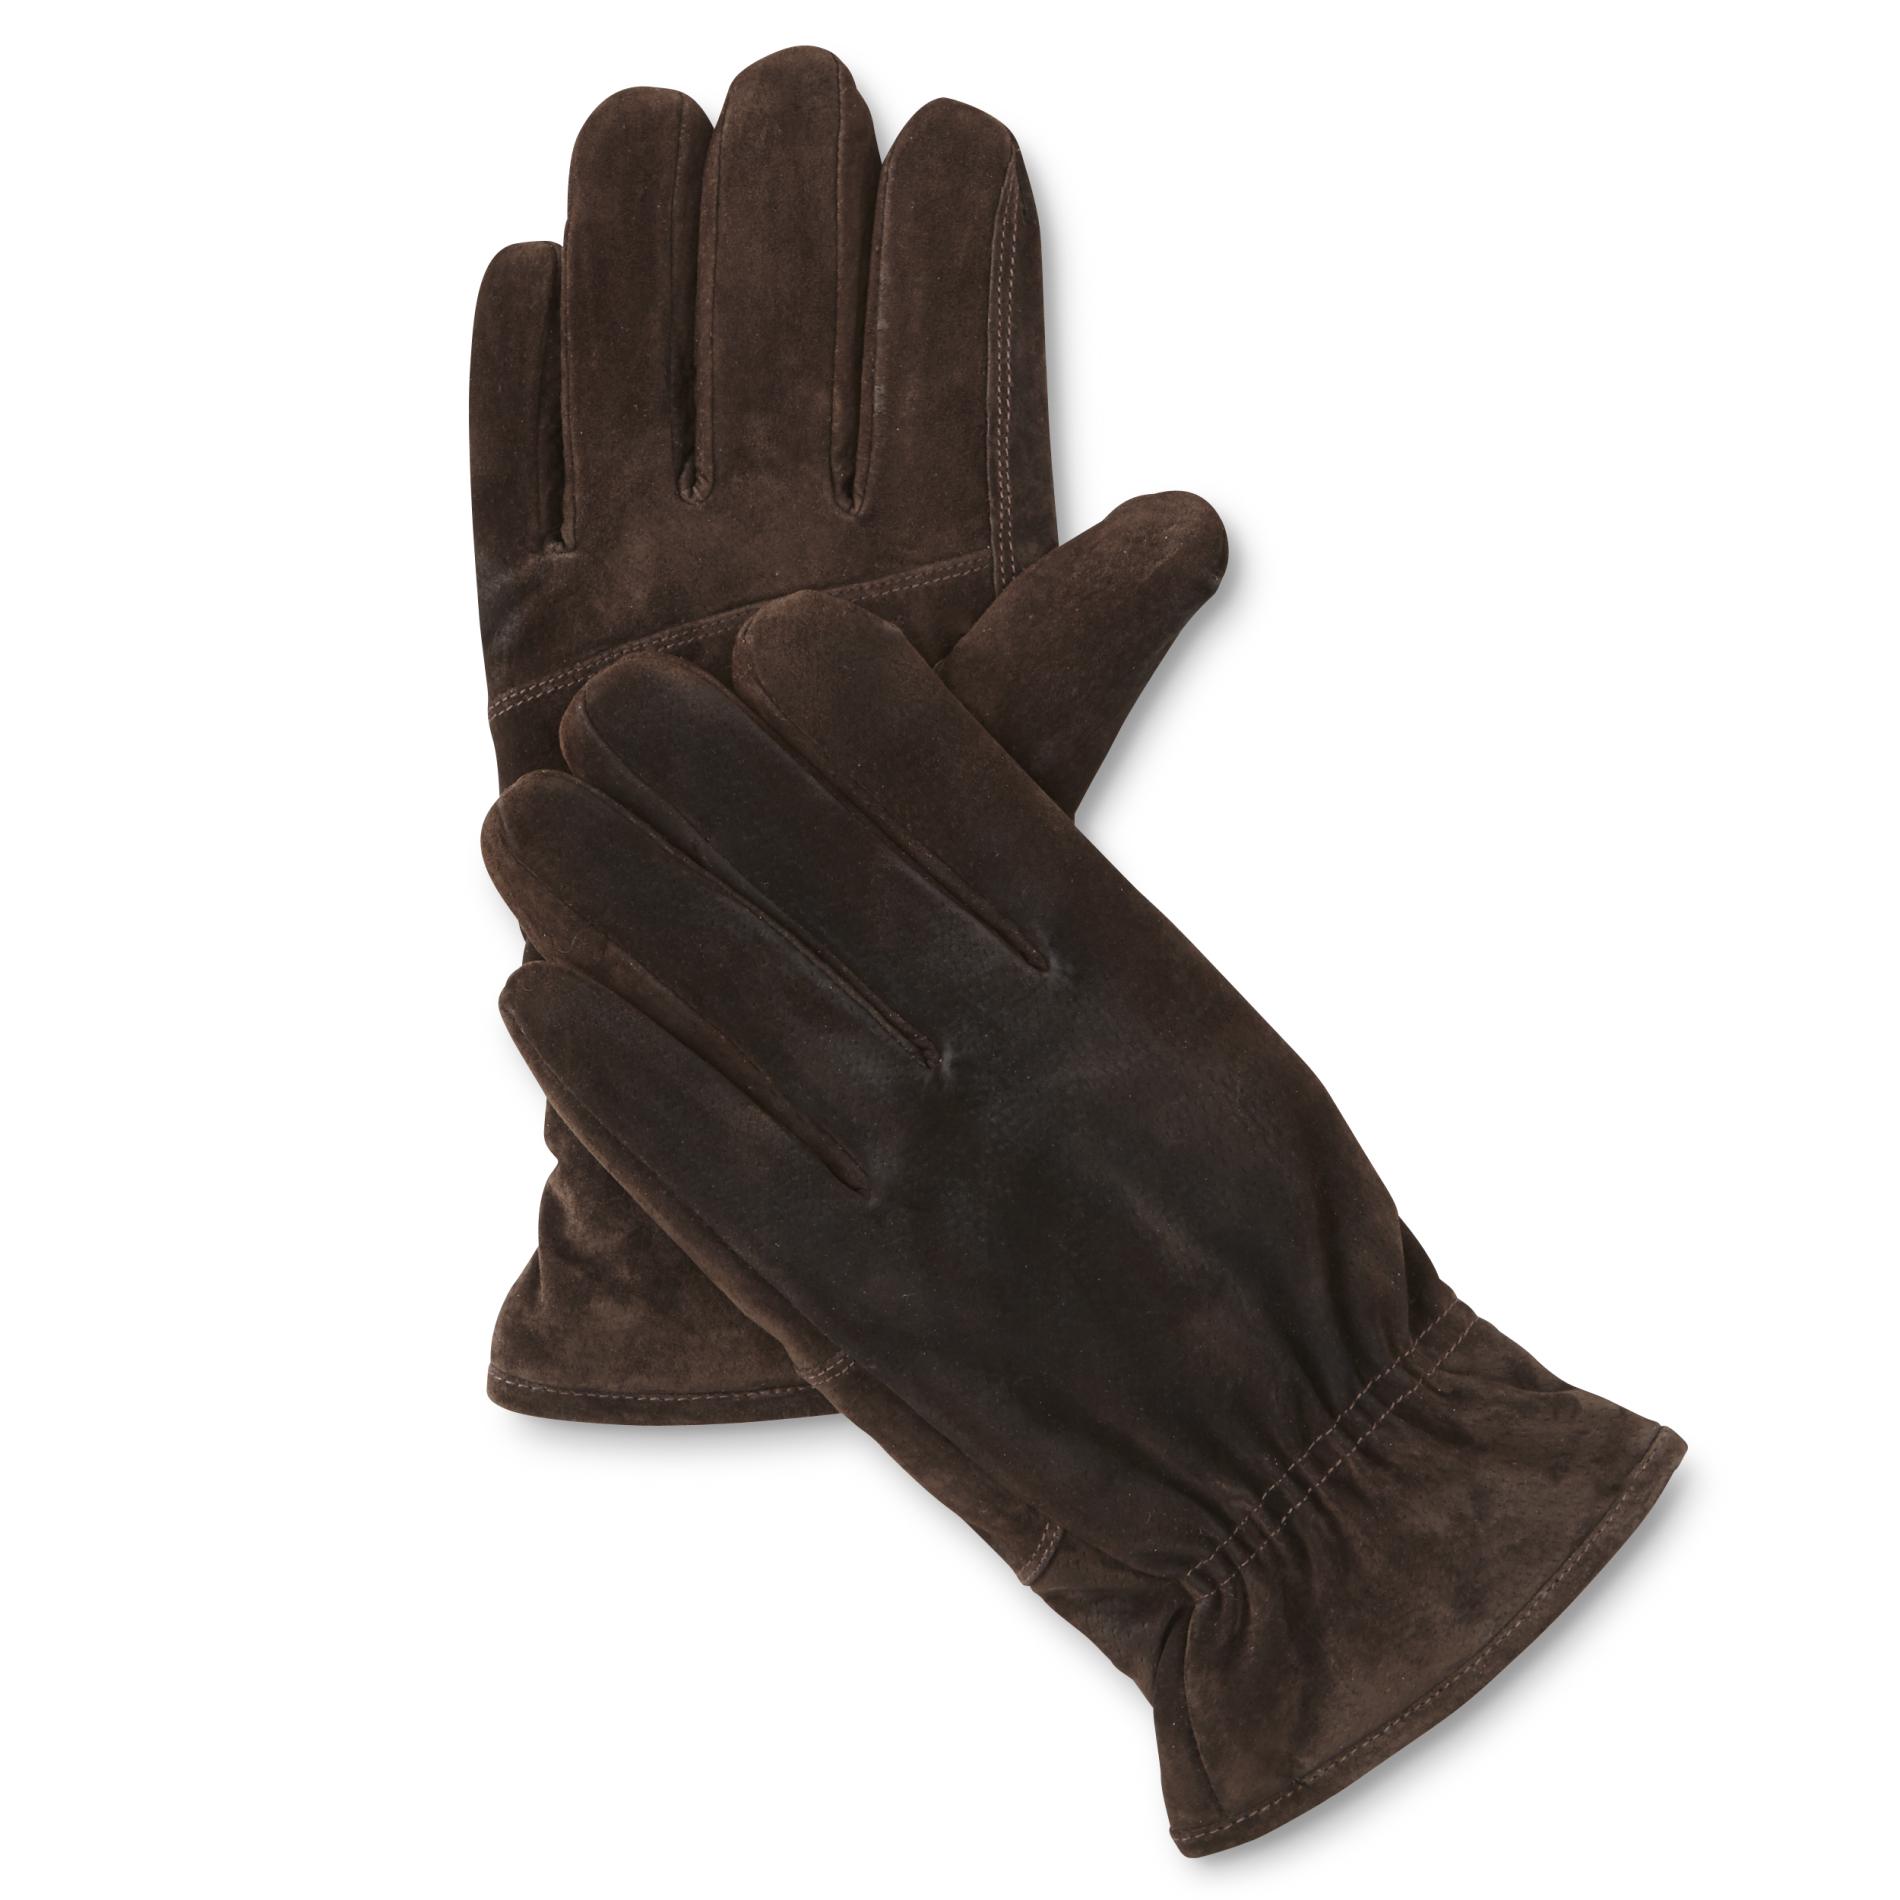 Outdoor Life Men's Lined Suede Gloves